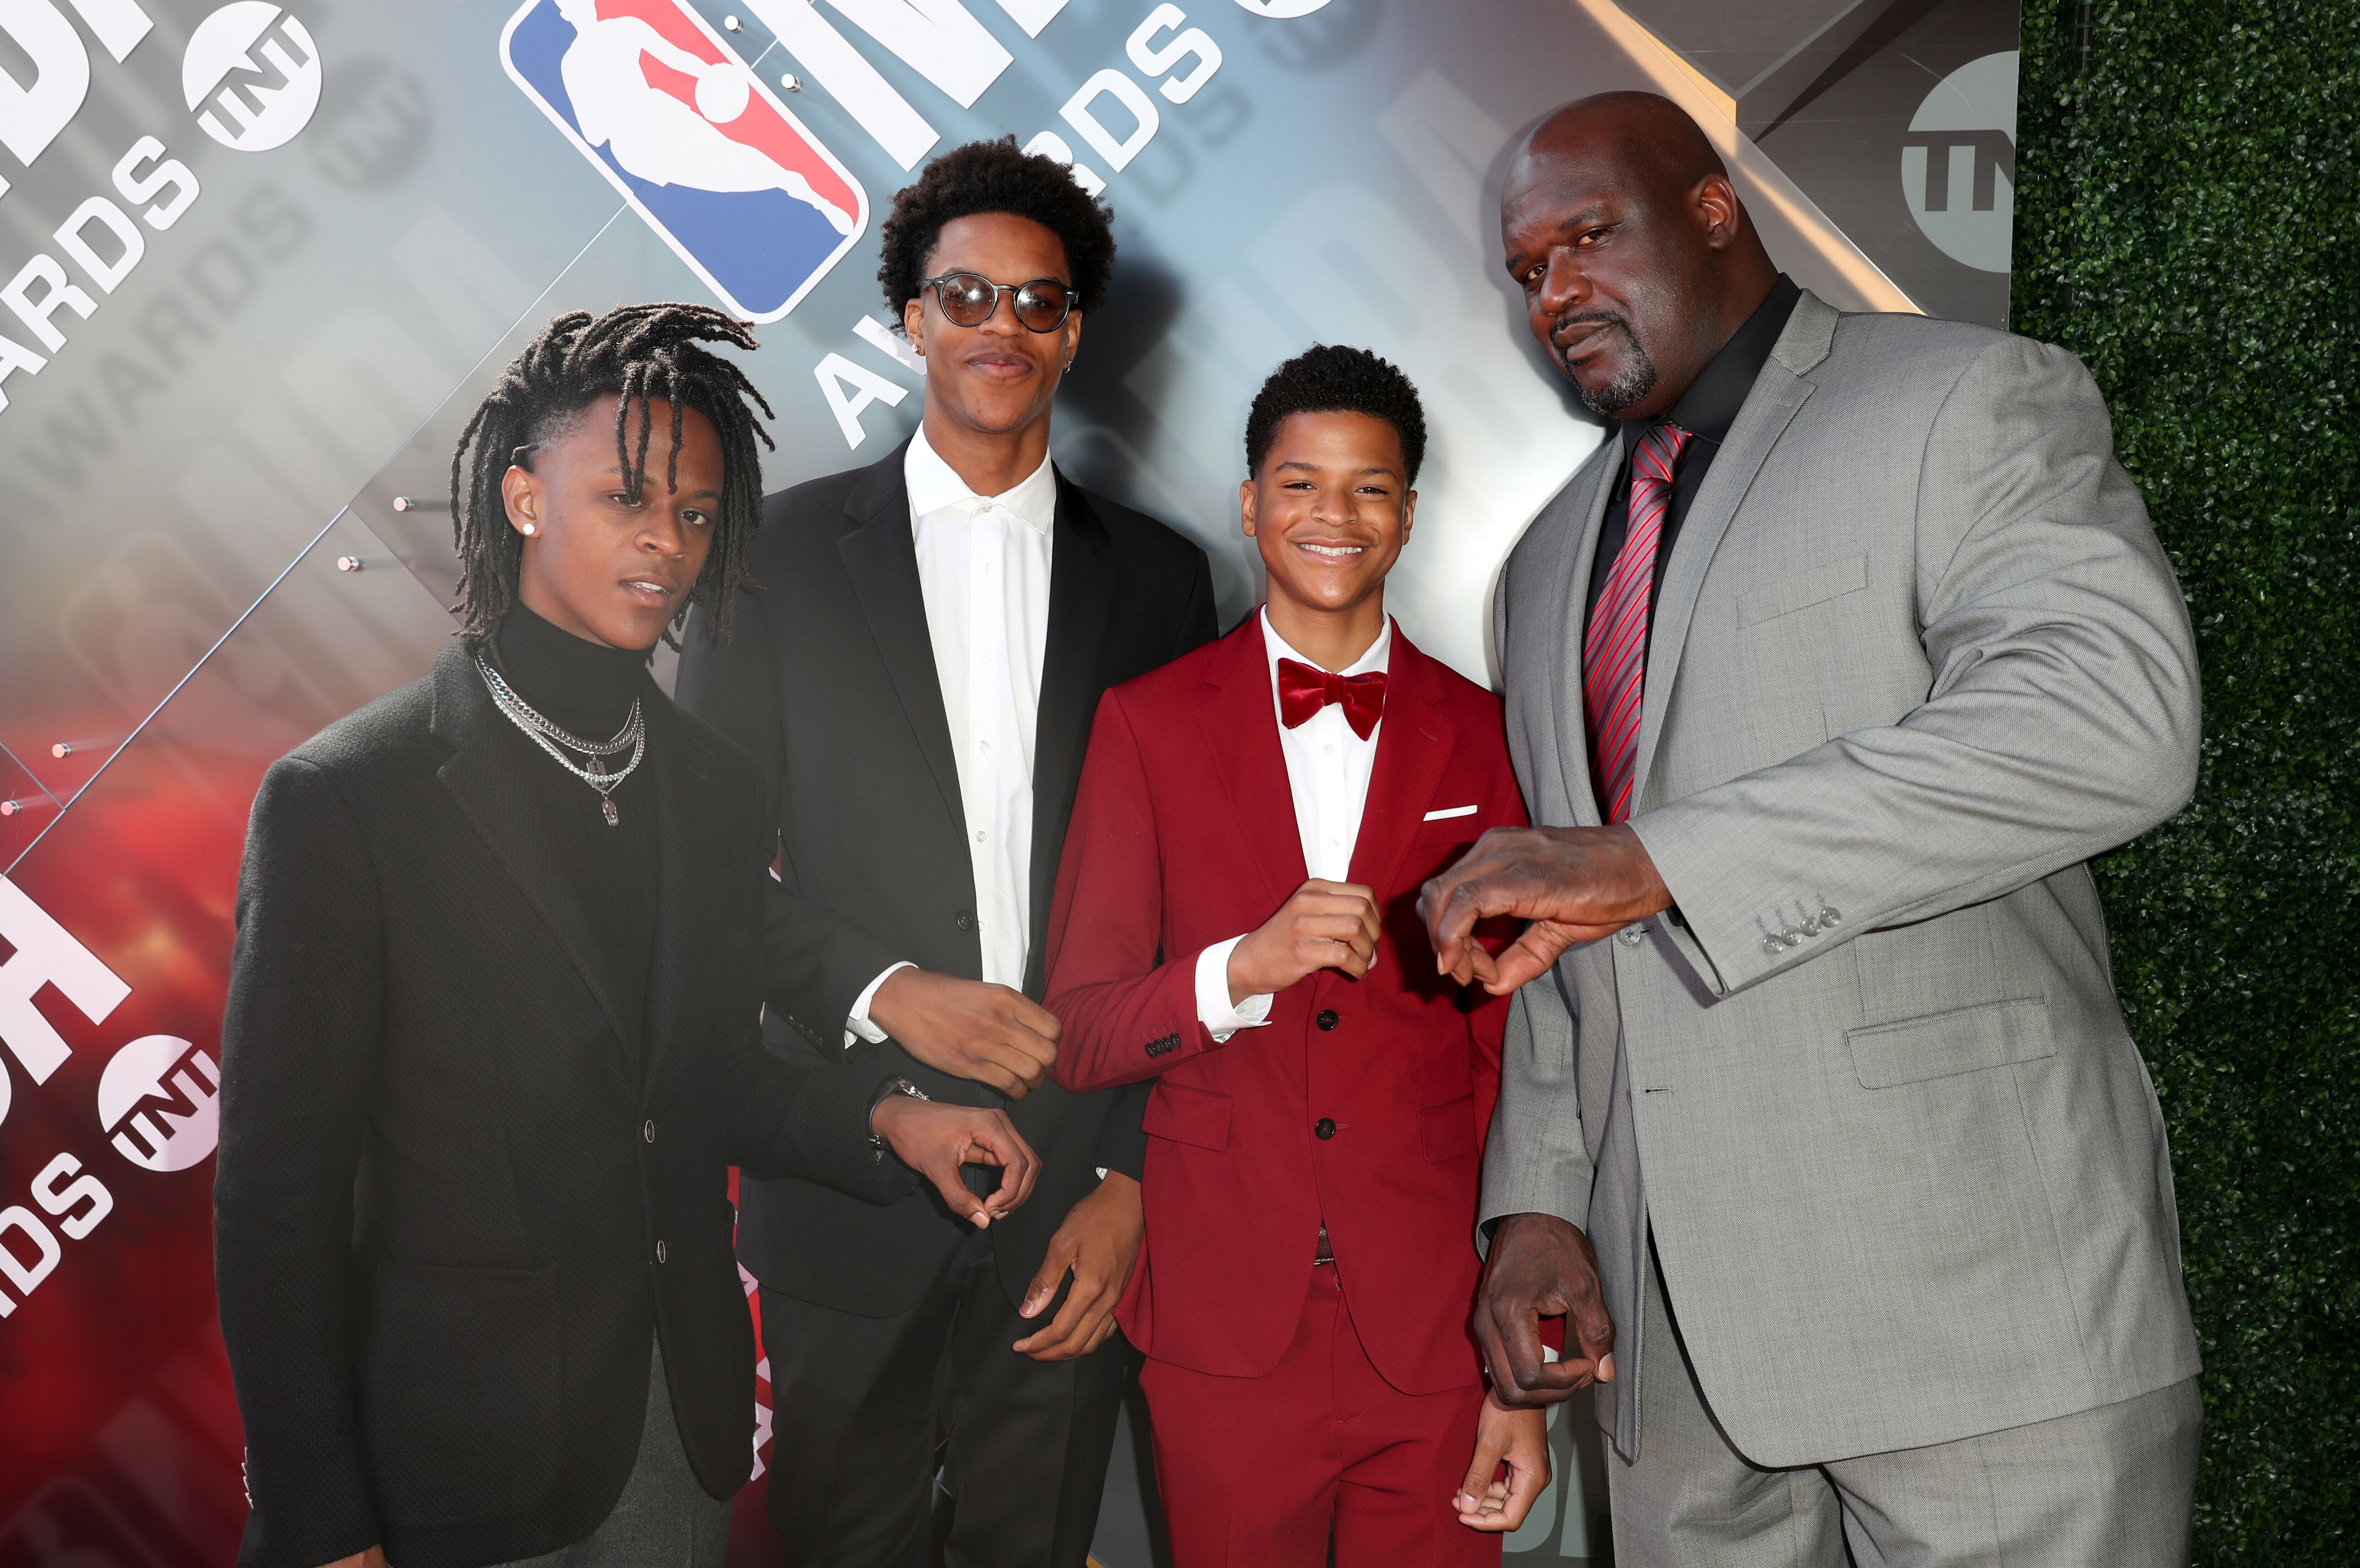 Myles O'Neal, Shareef O'Neal, Shaqir O'Neal, and Shaquille O'Neal attend 2018 NBA Awards at Barkar Hangar on June 25, 2018 in Santa Monica, California. | Source: Getty Images